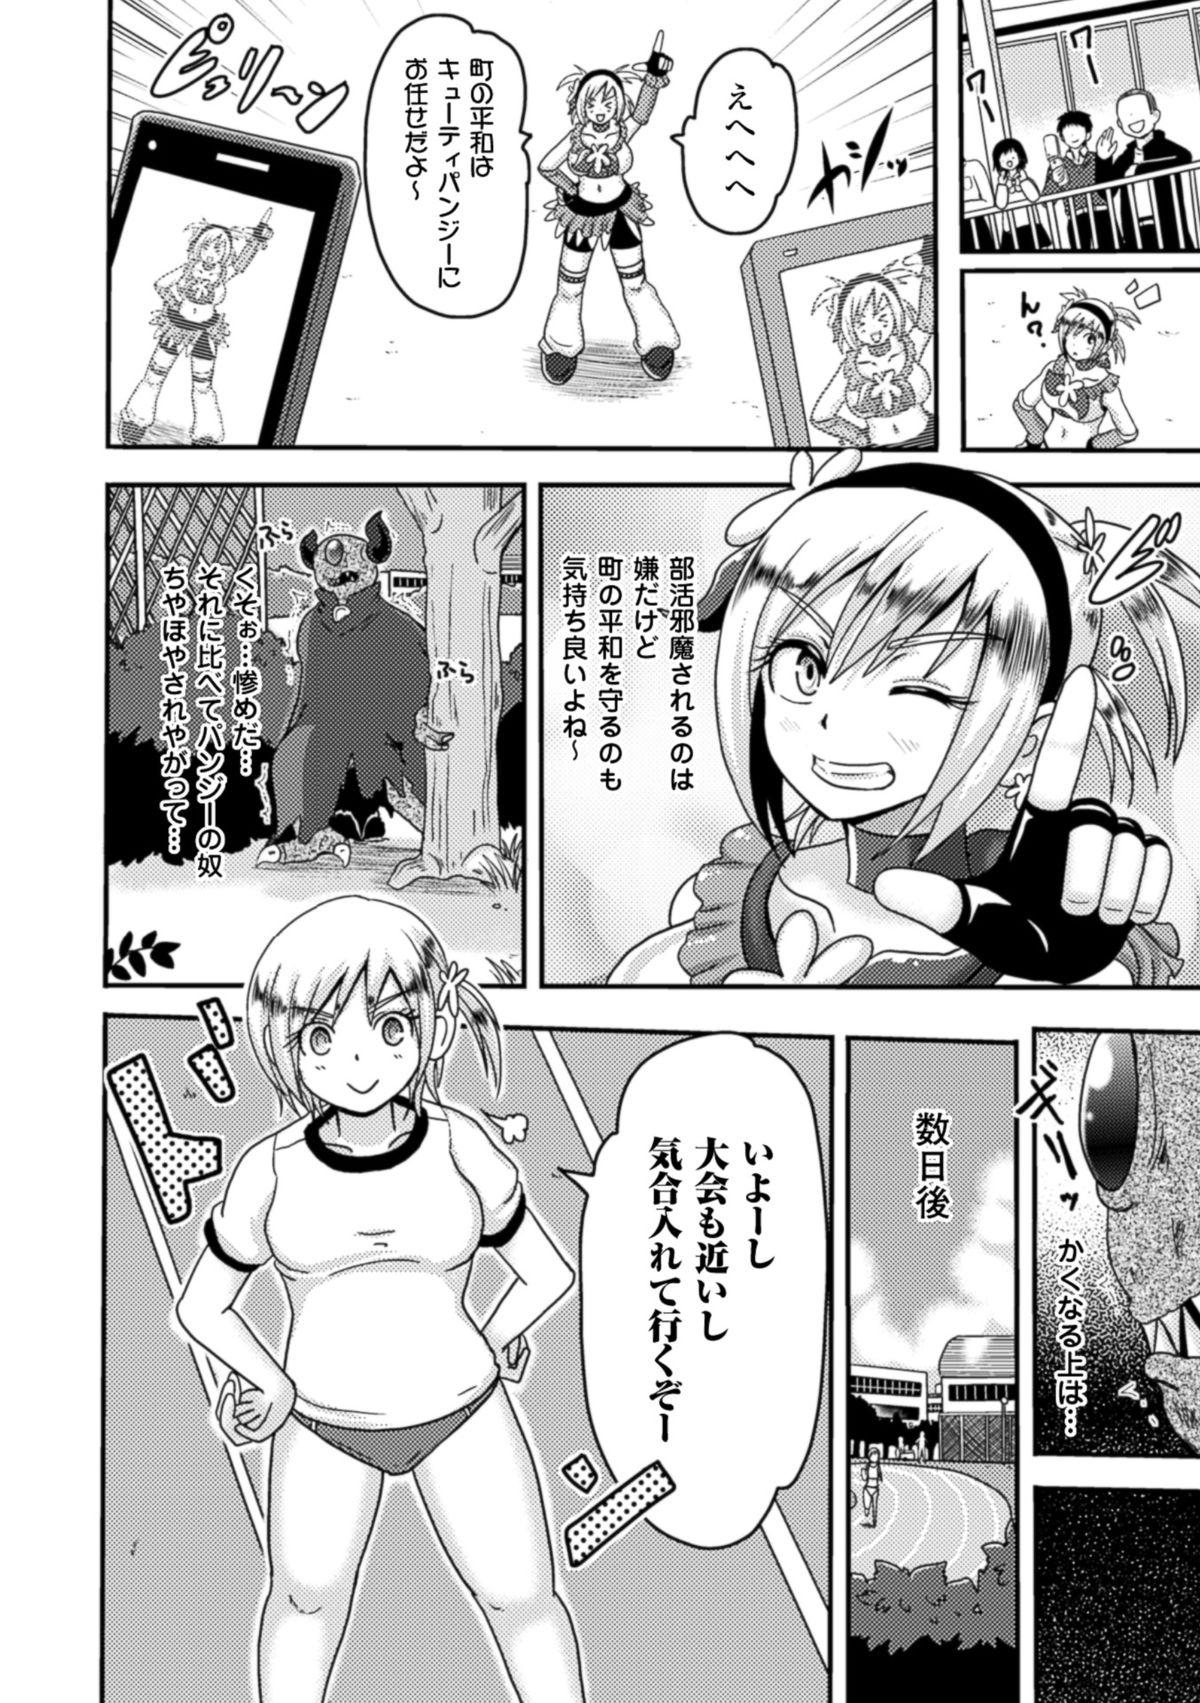 Femdom Akuochisukii Sensei no Heroine Haiboku no Houteishiki - Equation of Heroine's defeat by Mr. Akuochisukii 18 Year Old - Page 6